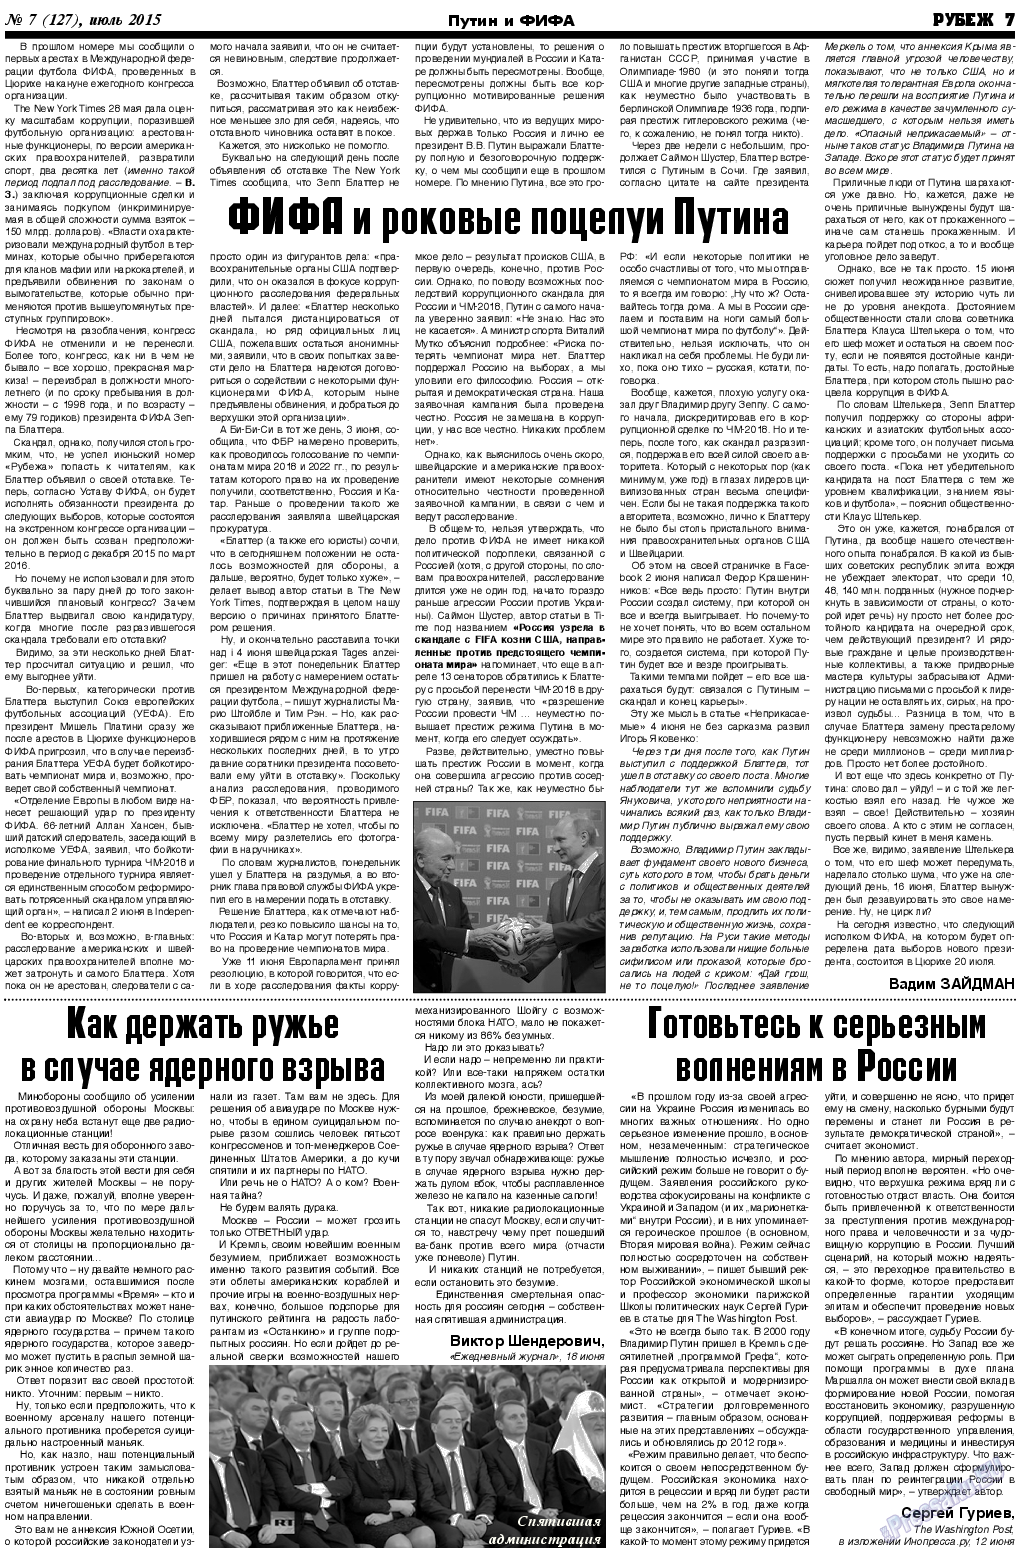 Рубеж, газета. 2015 №7 стр.7